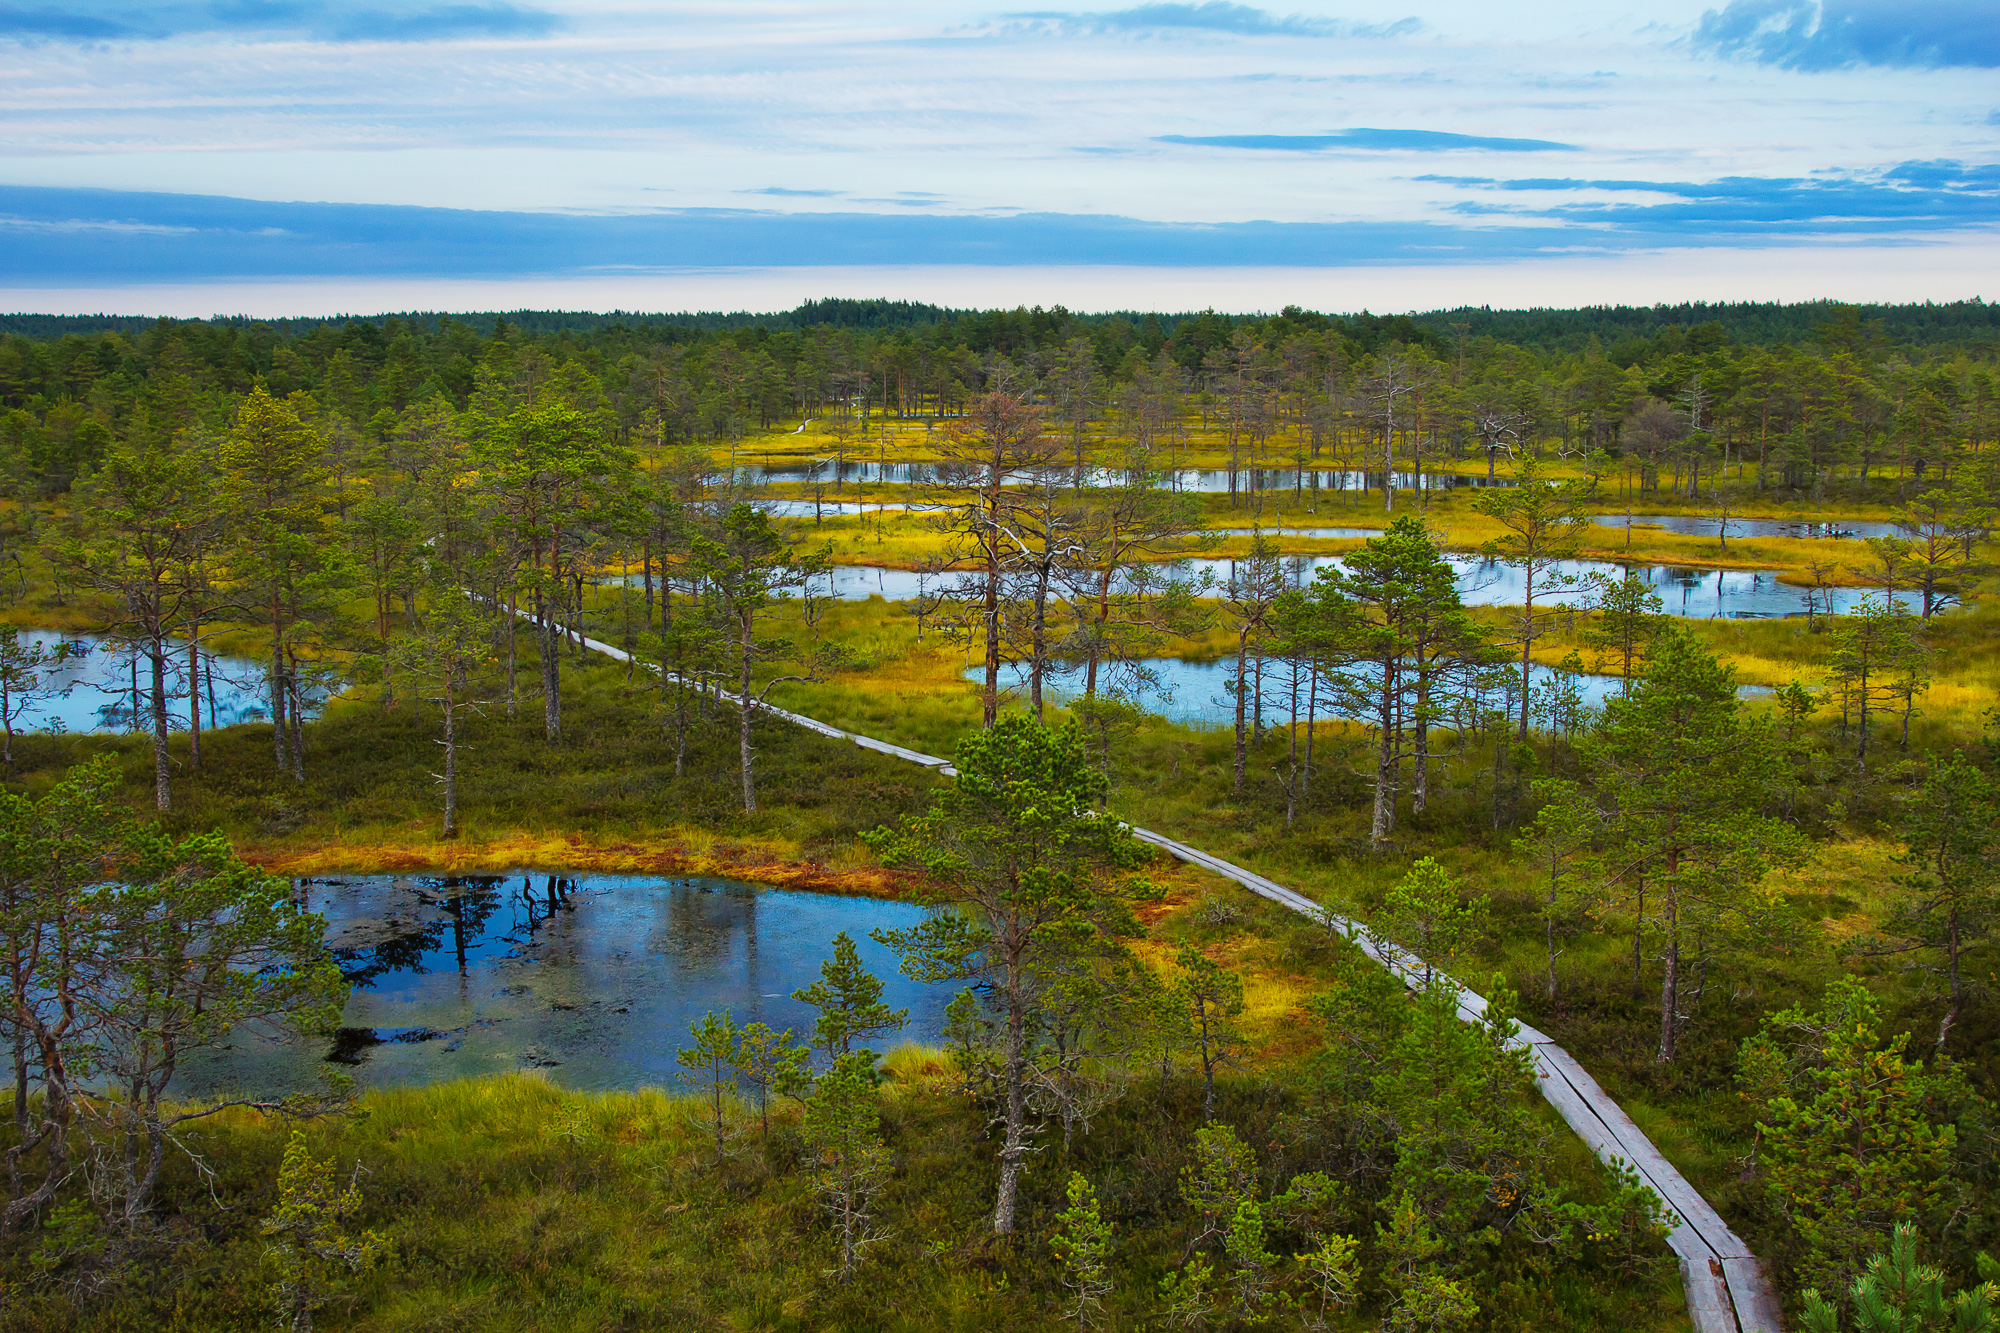 Viru bog, Lahemaa National Park, Estonia